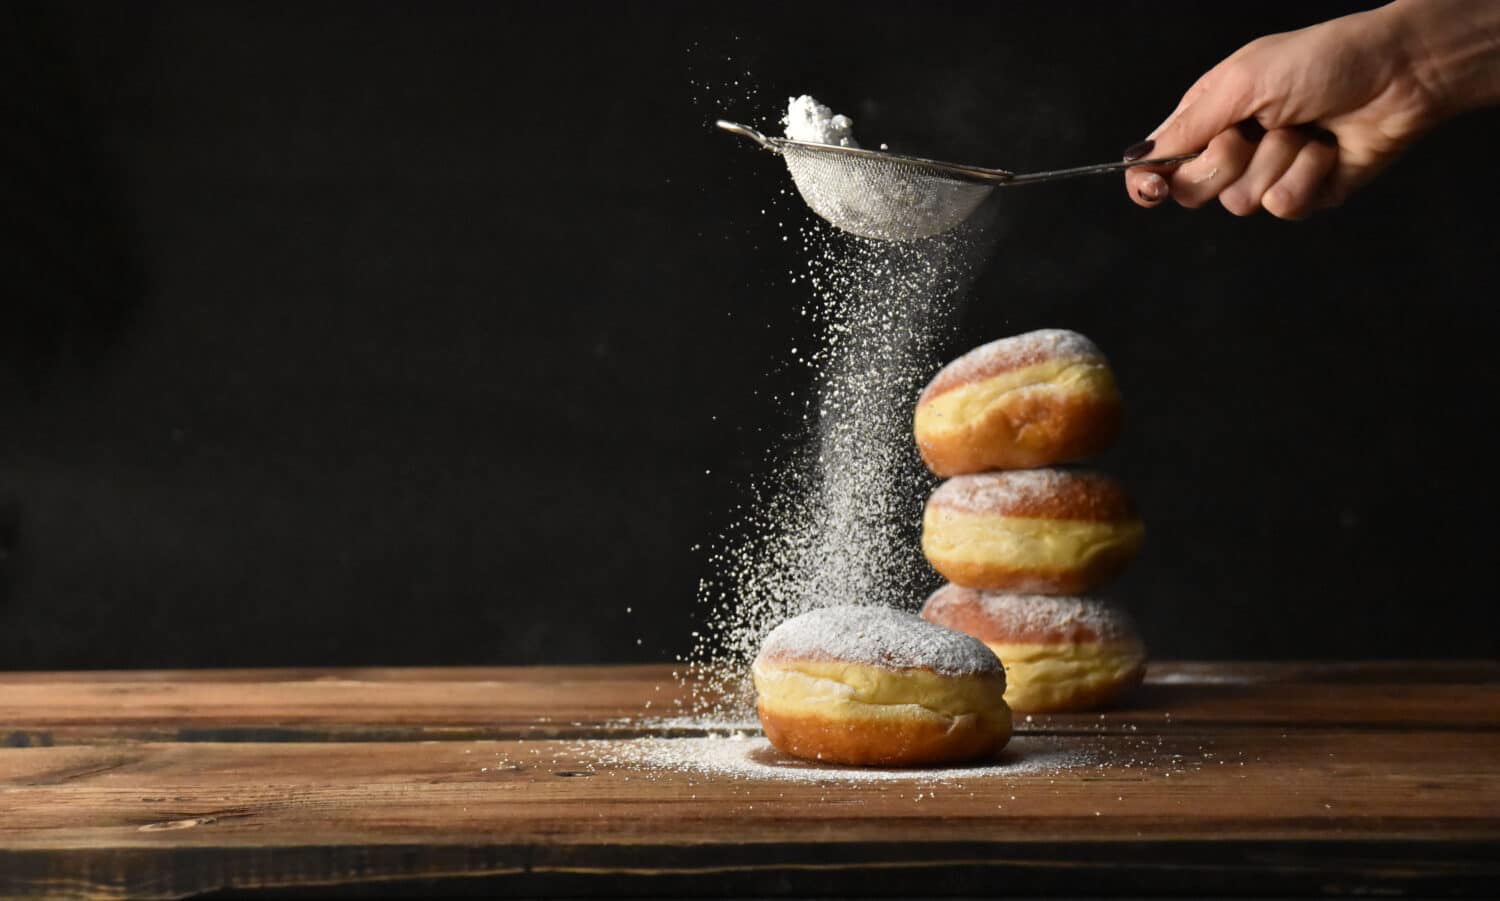 European donut sprinkled with powdered sugar on black background